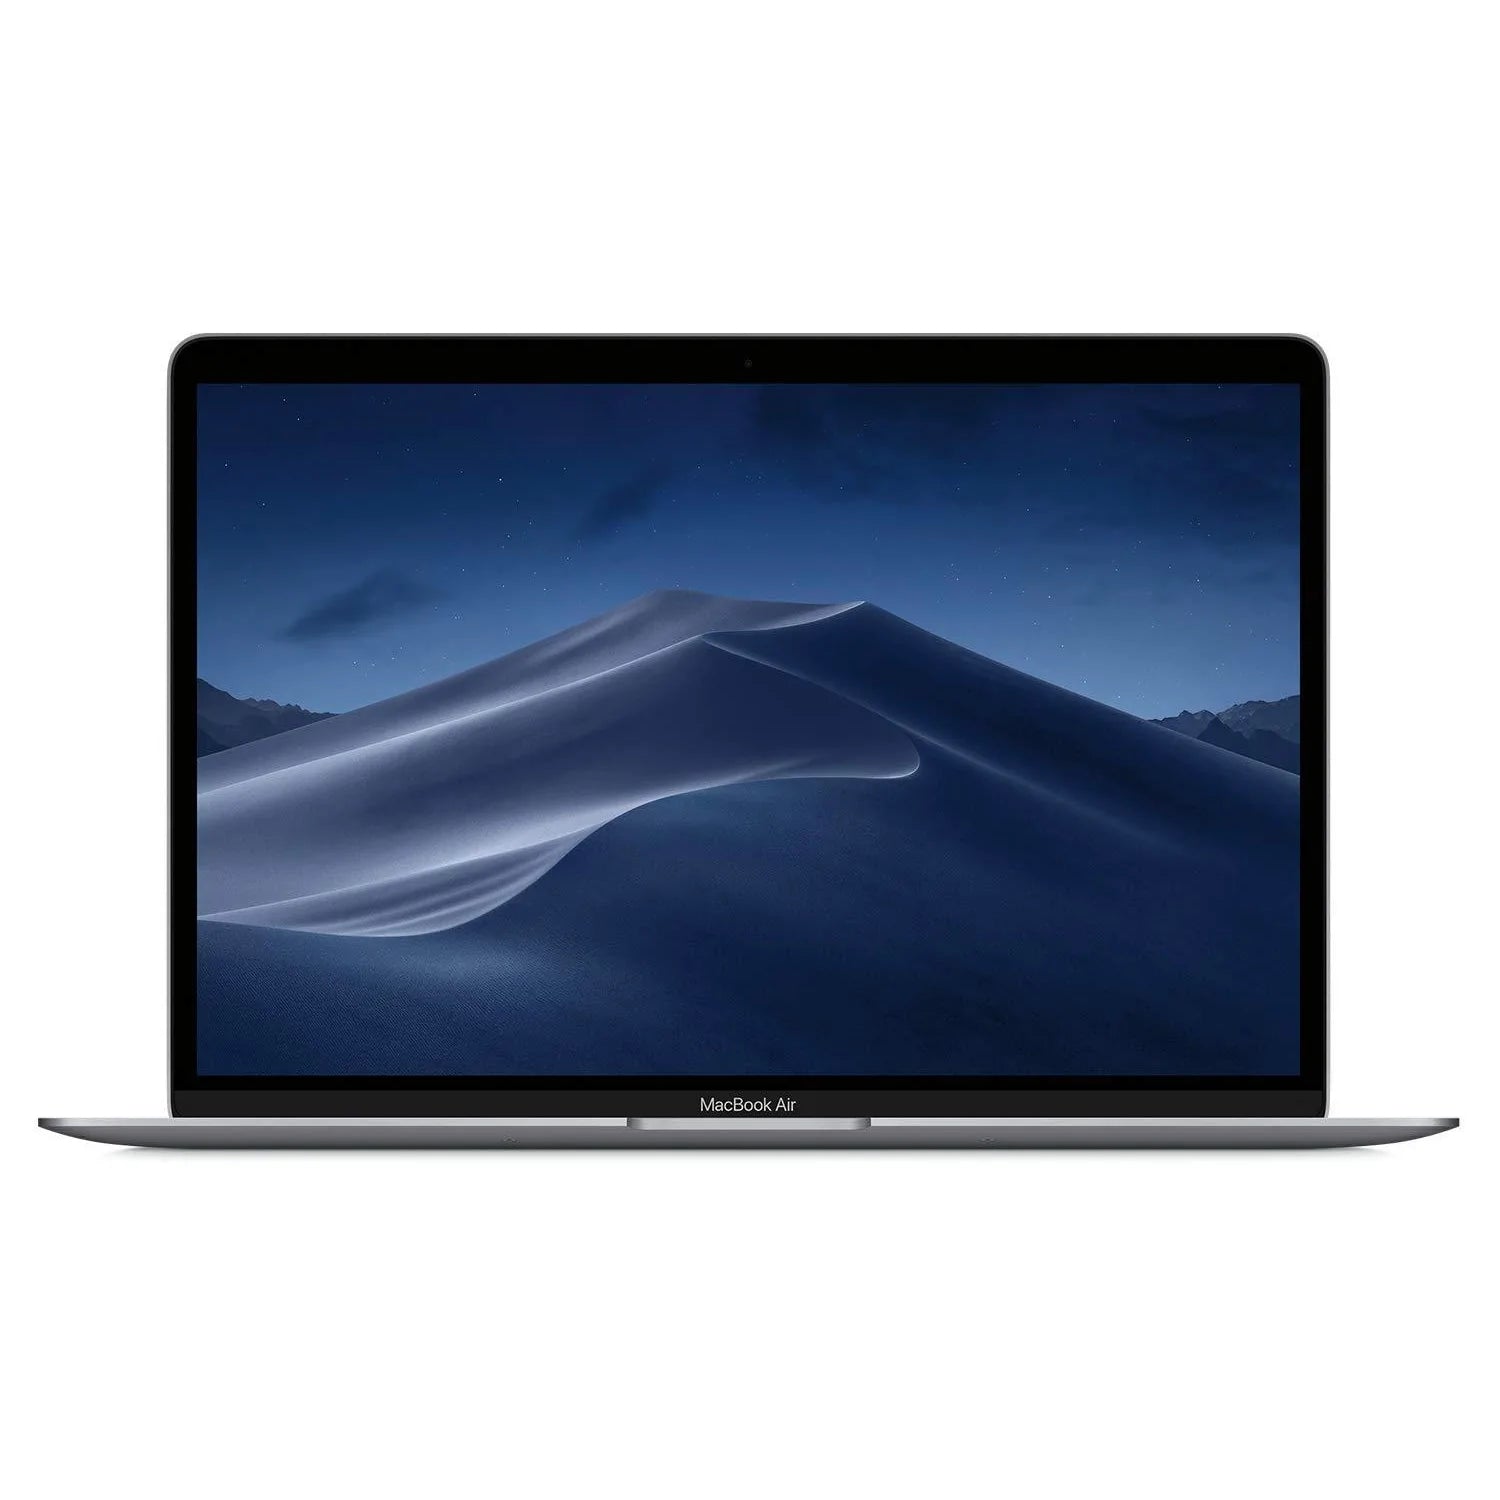 Apple MacBook Air 13.3'' MRE82LL/A (2018) Intel Core i5-8210Y, 8GB RAM, 128GB SSD - Space Grey - Refurbished Excellent